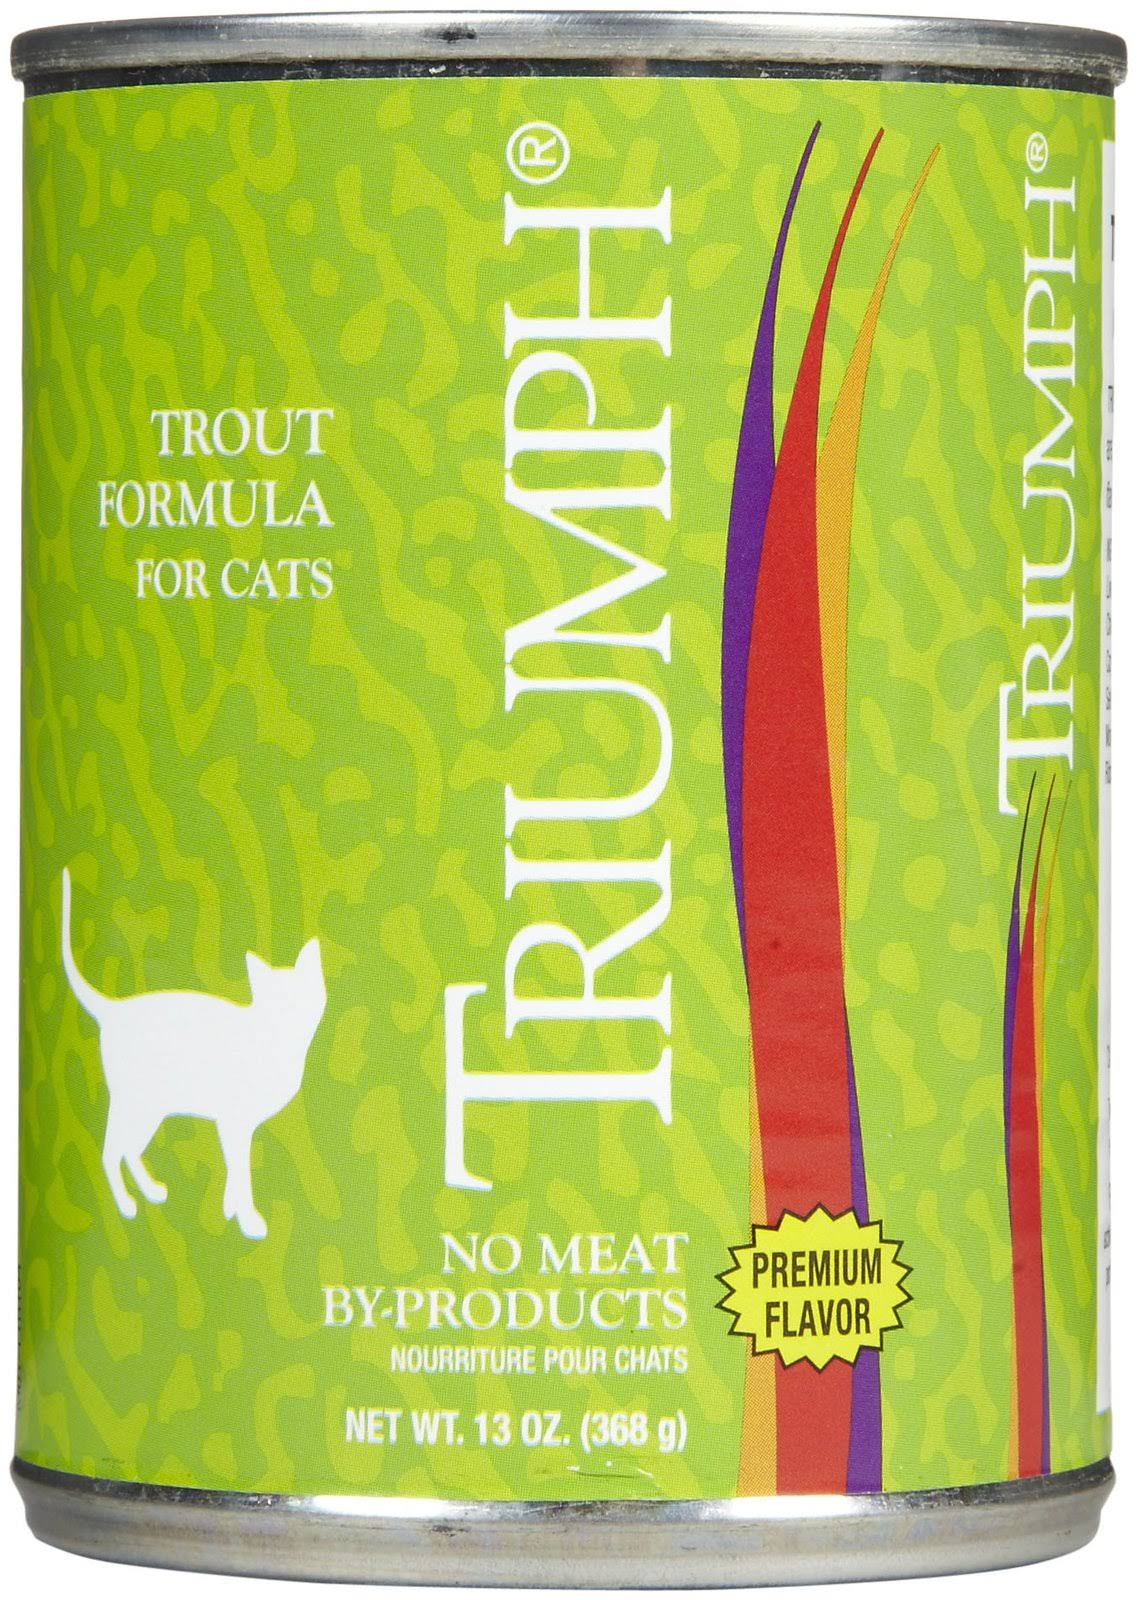 Triumph Trout Canned Cat Food - 14oz